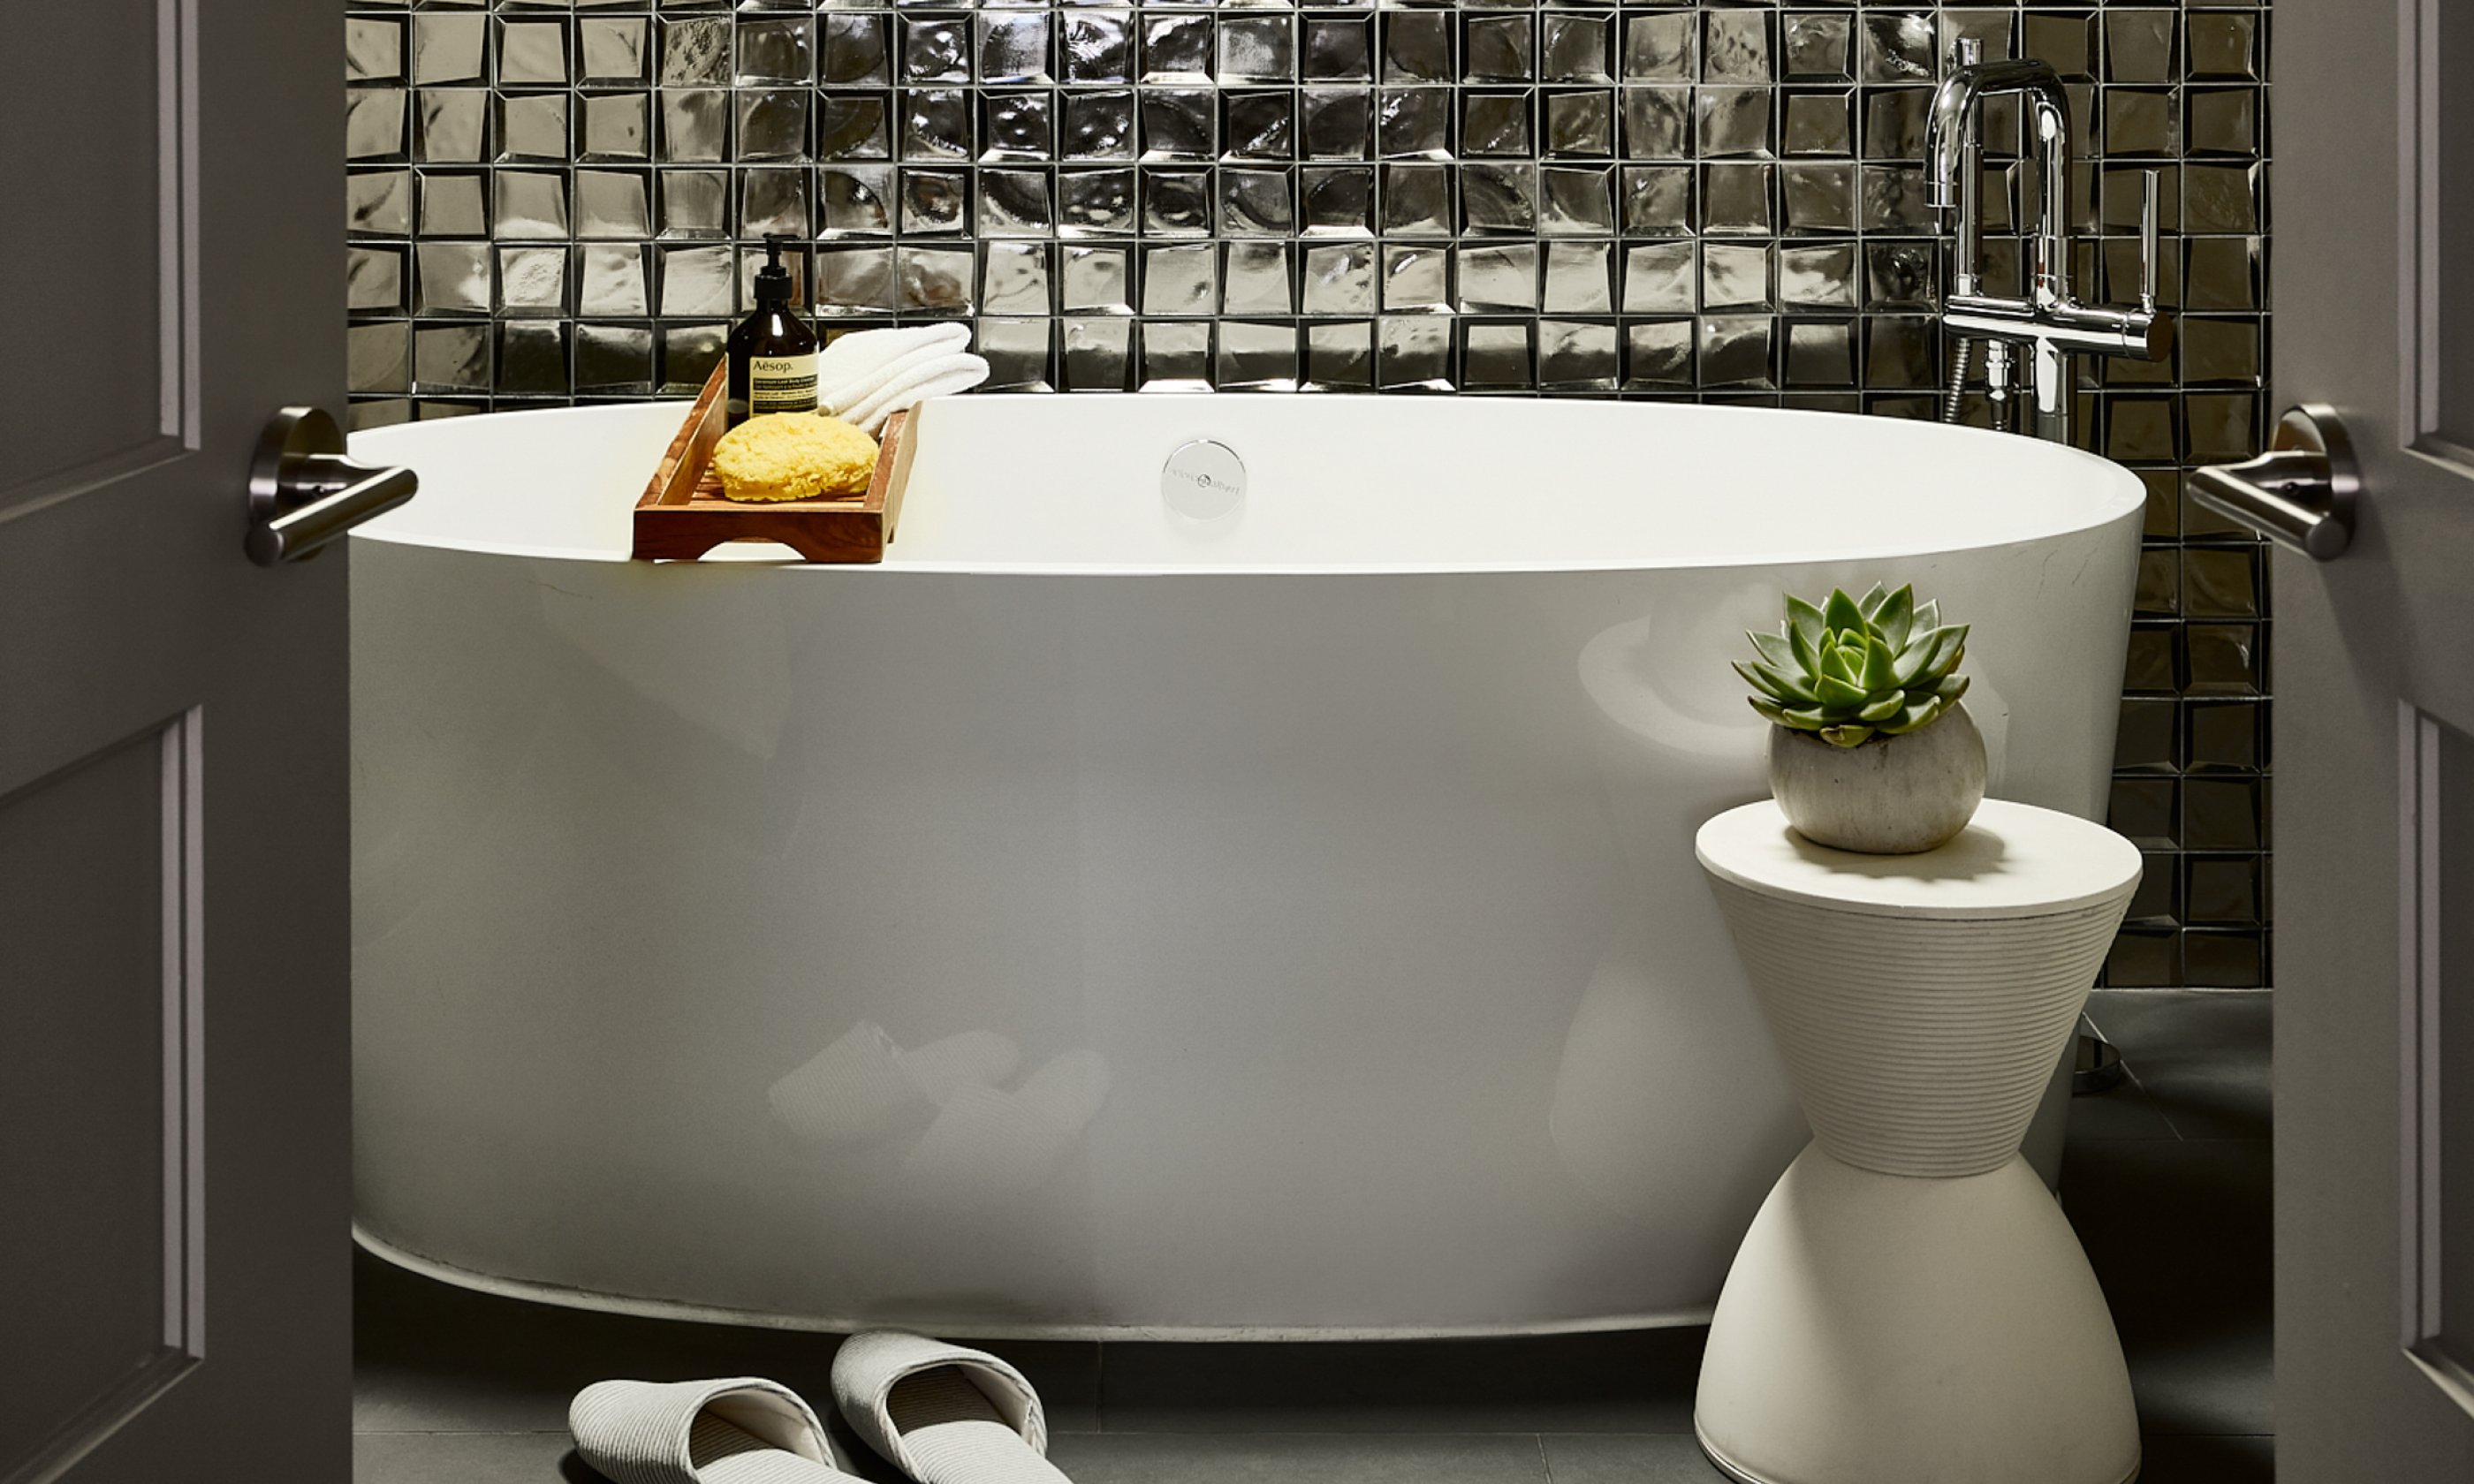 Metallic tiled bathroom with oversized soaking tub and white flip flops.